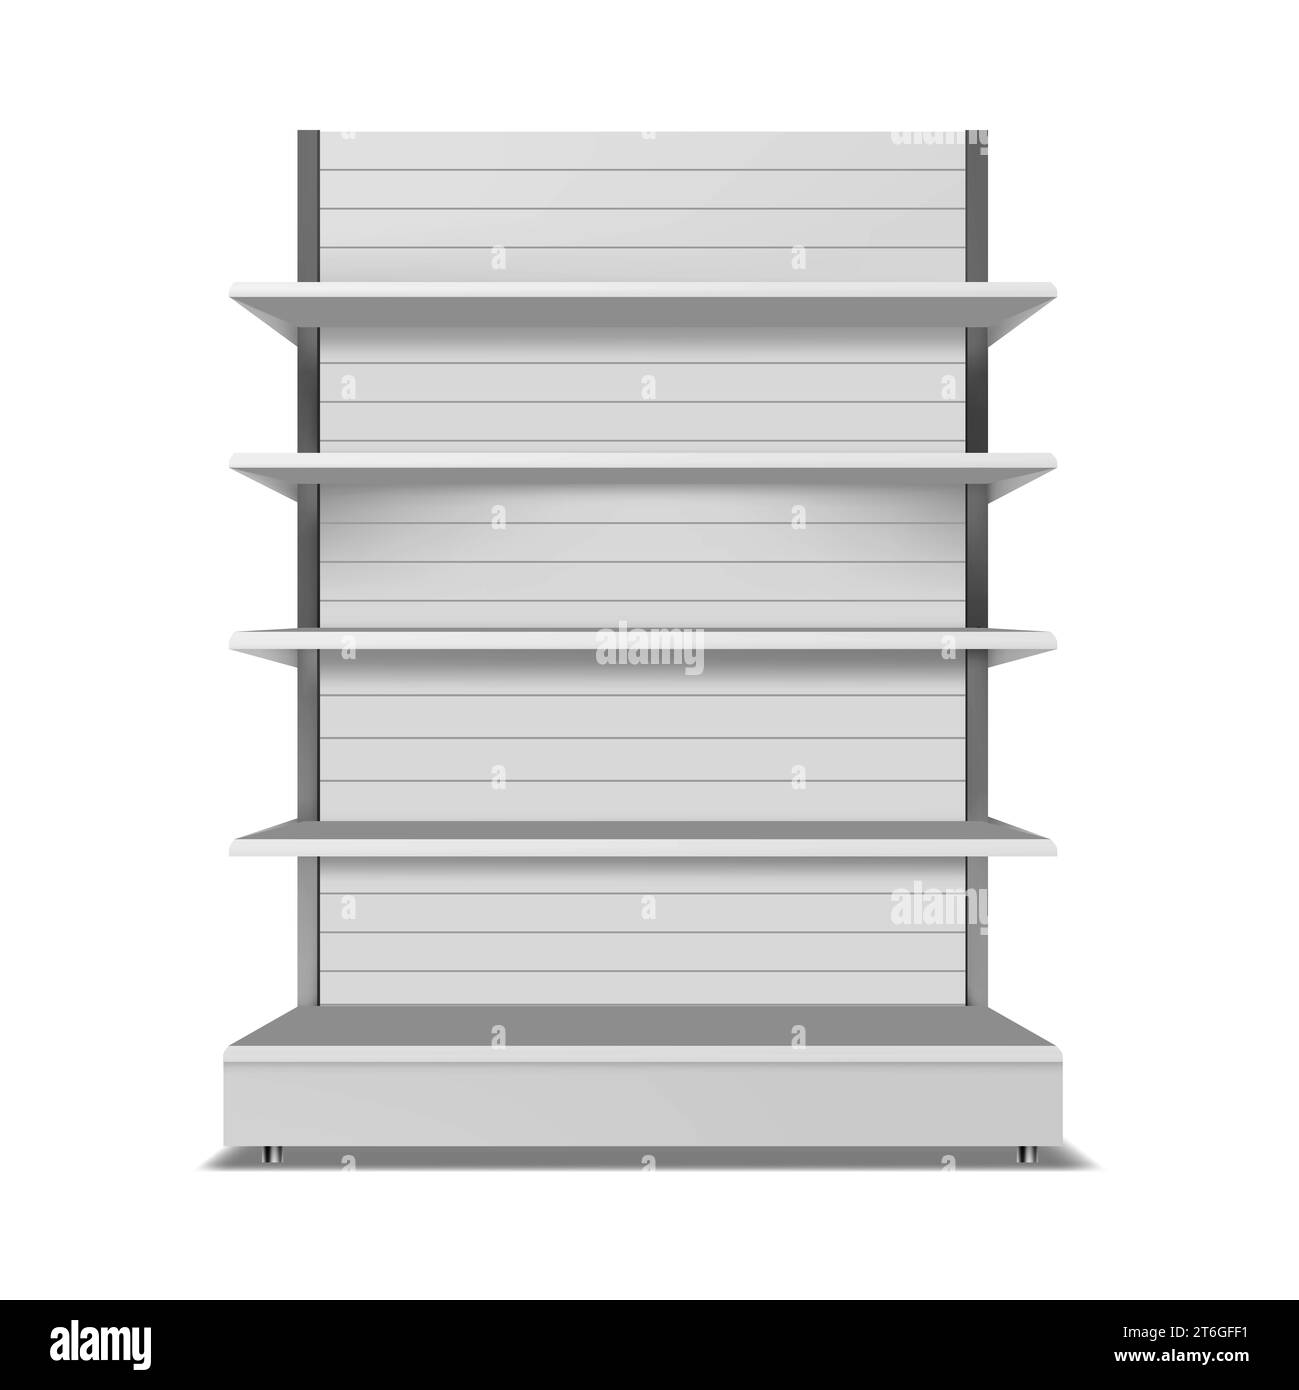 Gondola Display for Branding in Superstore, Blank Display Shelf Stand. #gondola #branding #supermarket #shelf #mock-up Stock Photo